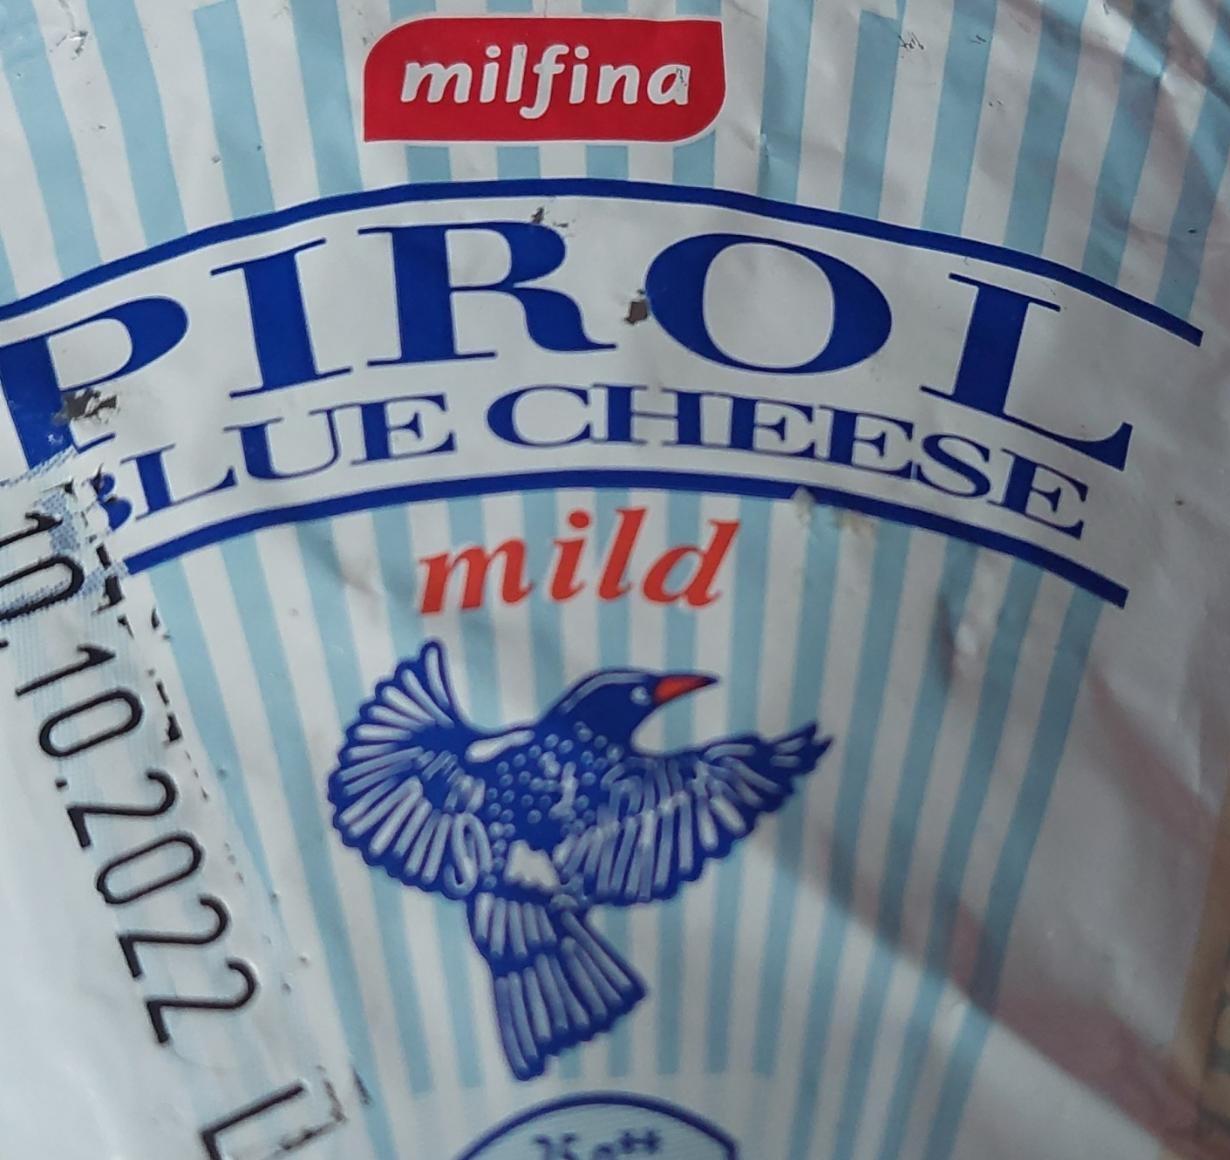 Képek - Pirol Blue cheese mild Milfina